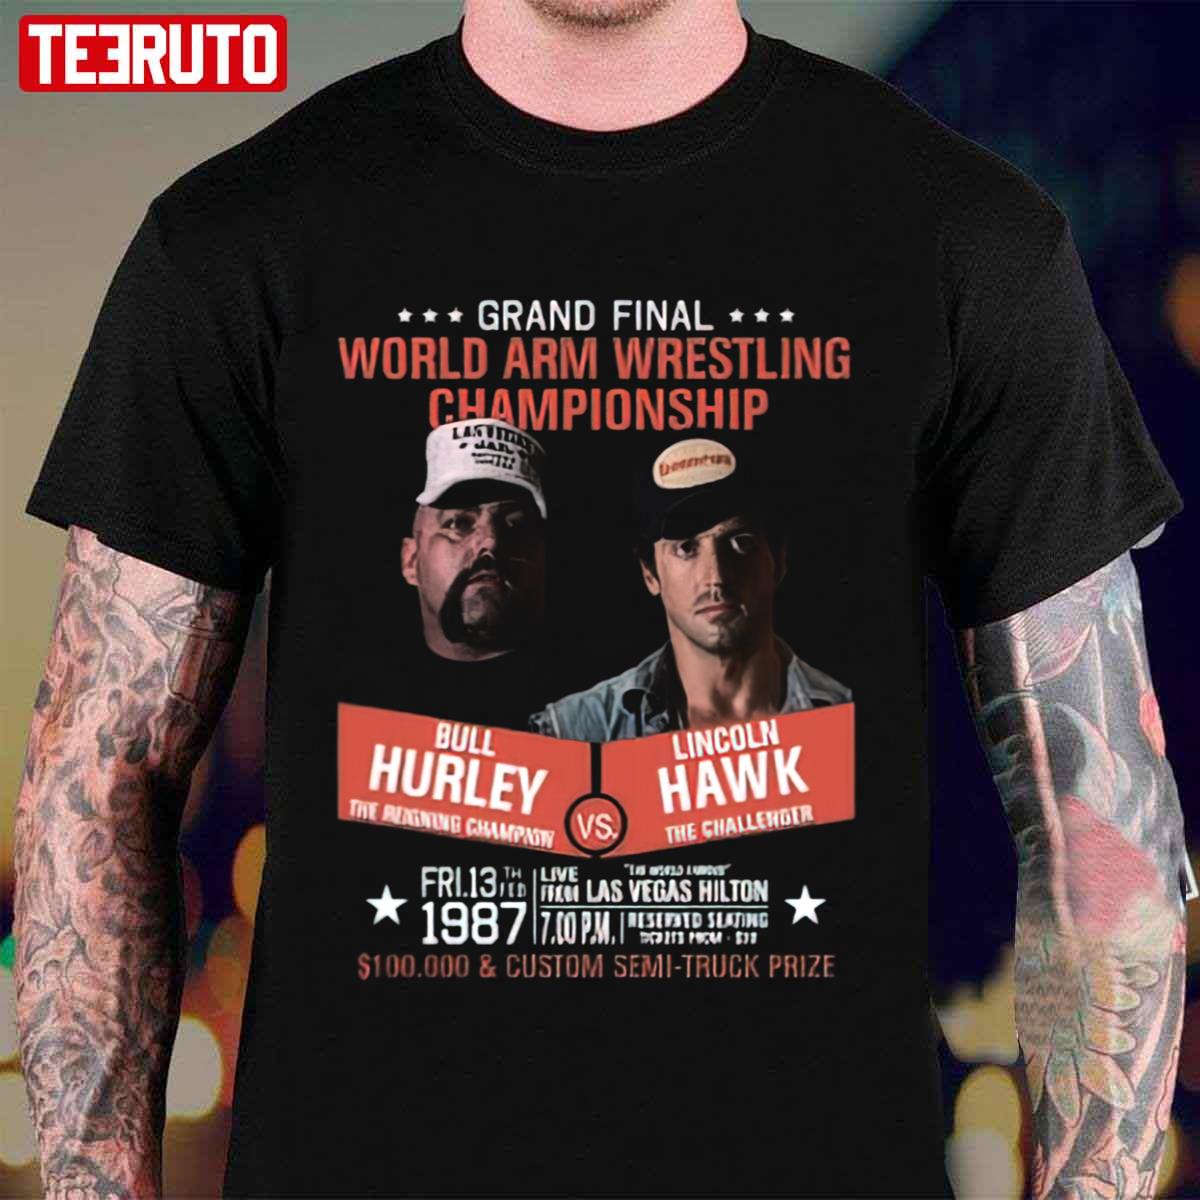 Bull Hurley Vs Lincoln Hawk World Arm Wrestling Championship Unisex T-Shirt